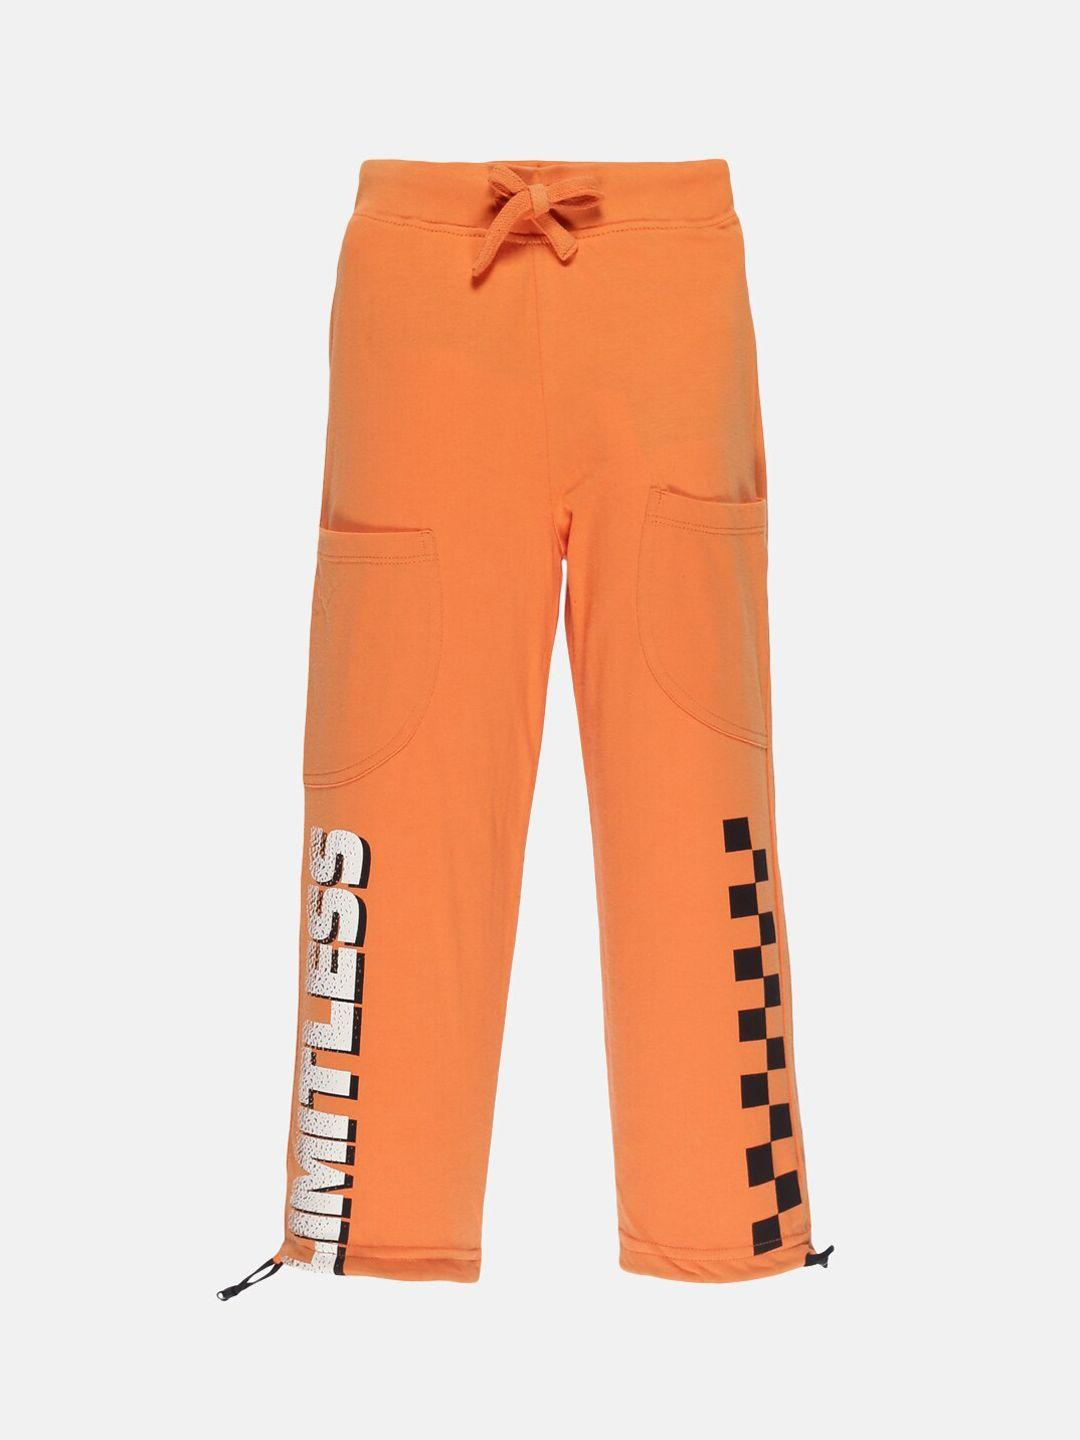 kiddopanti boys orange-colored printed pure cotton track pants